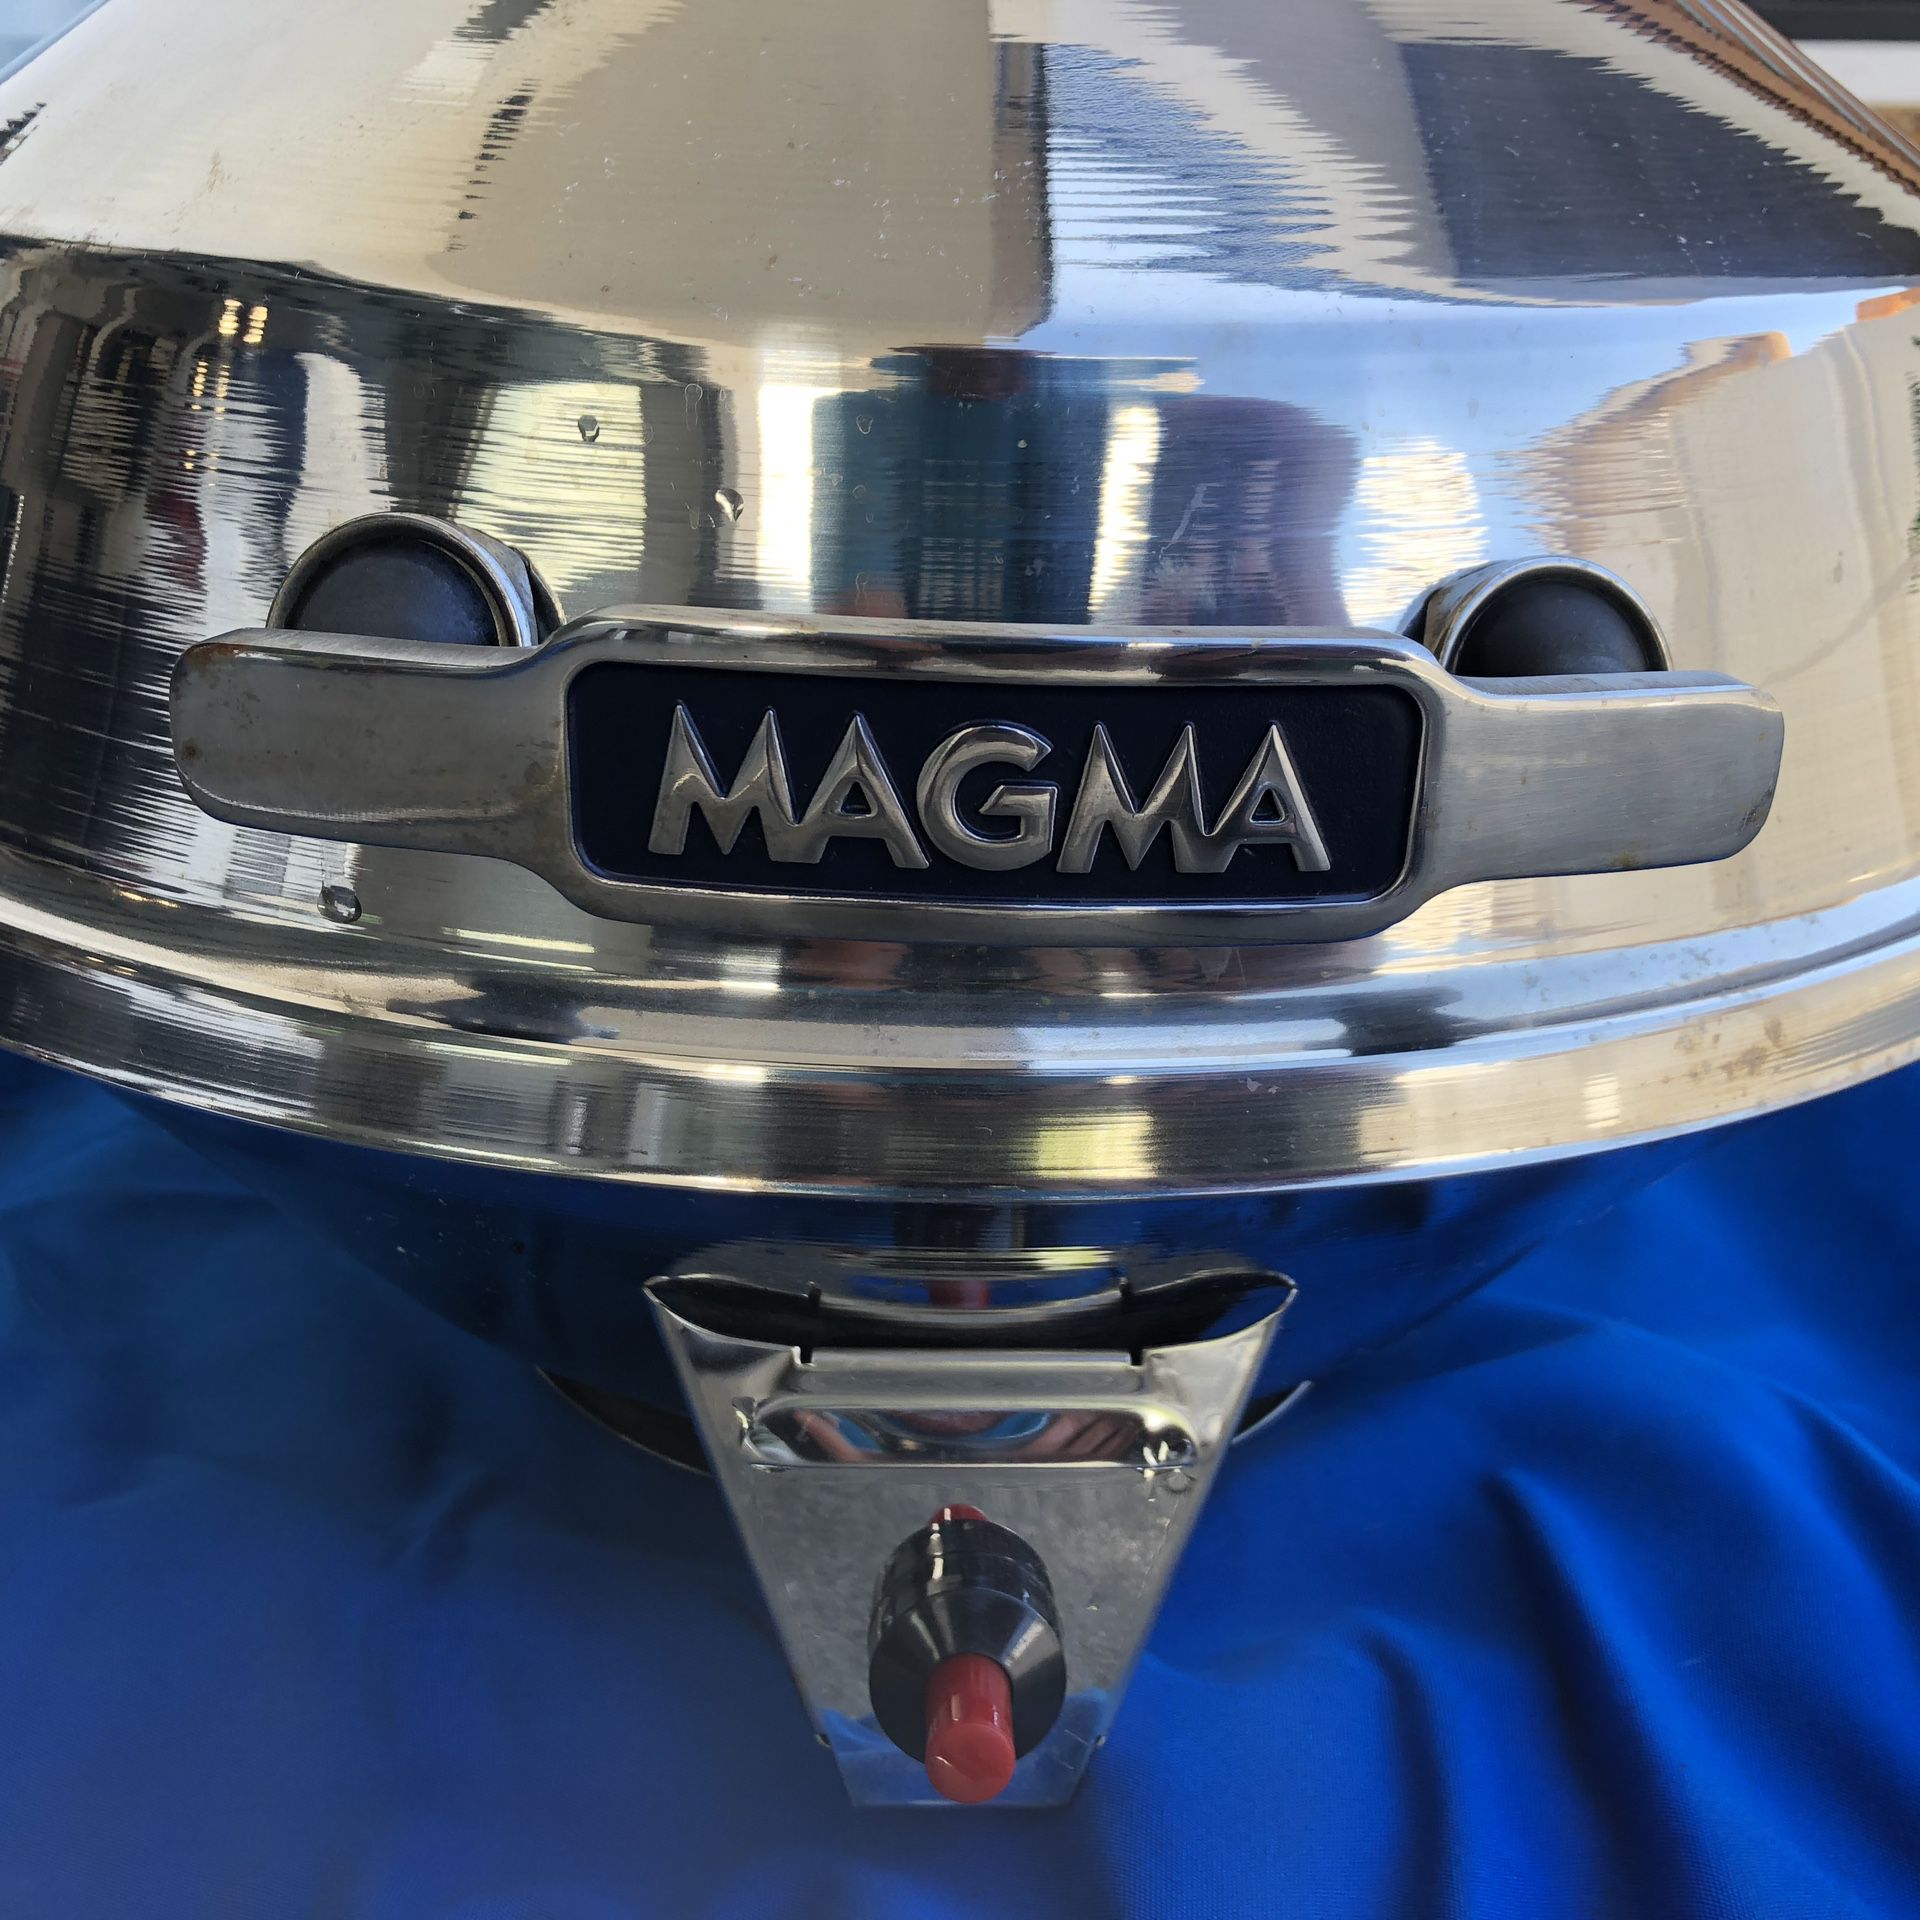 Magma Marine Kettle Grill